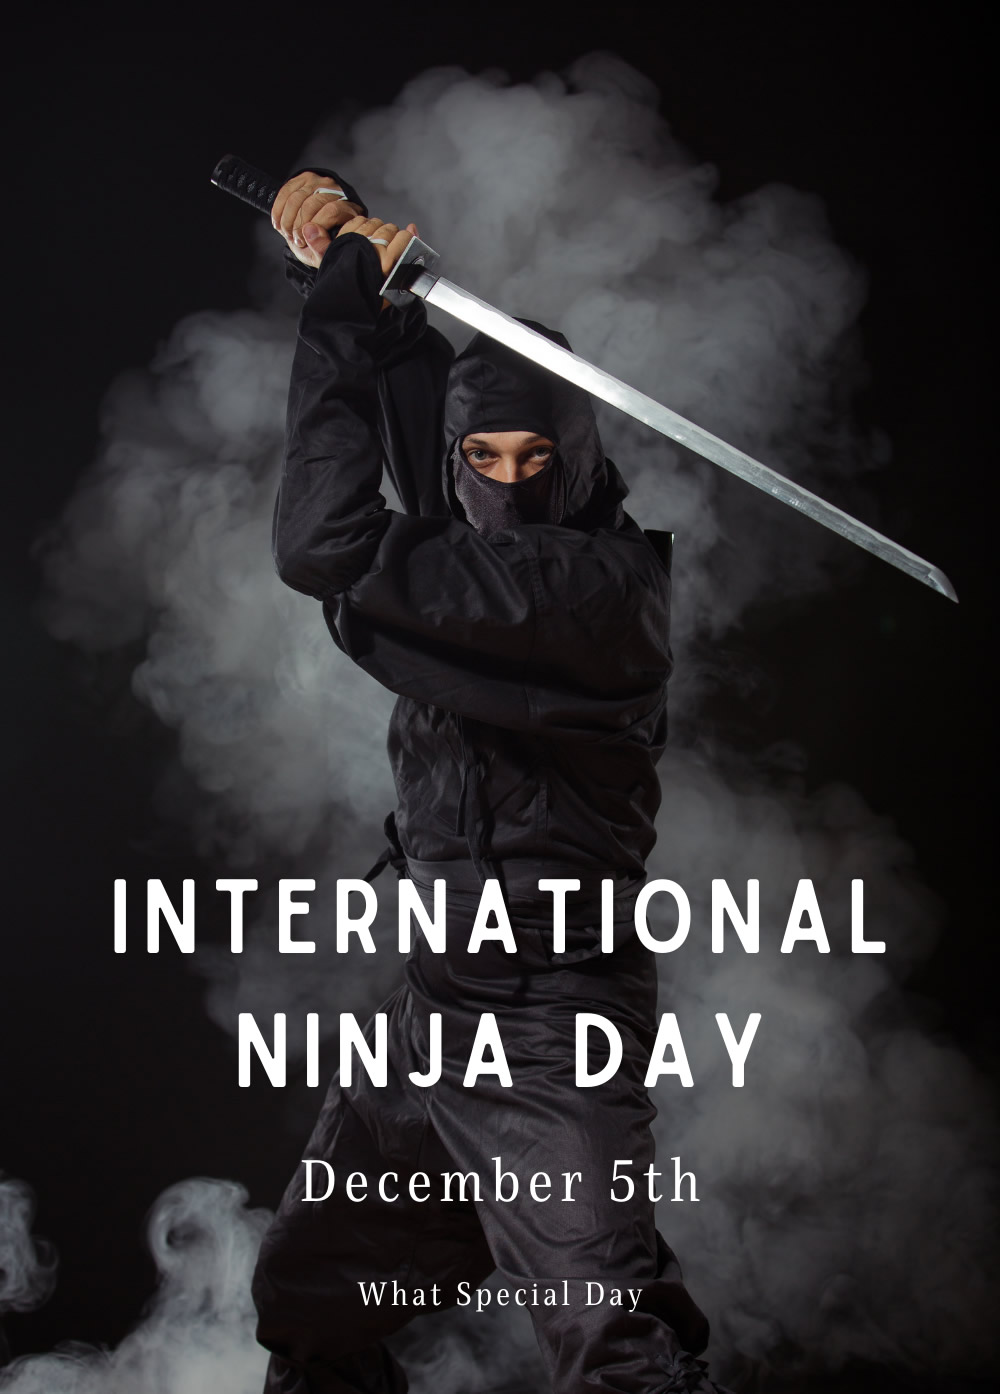 International Ninja Day December 5th